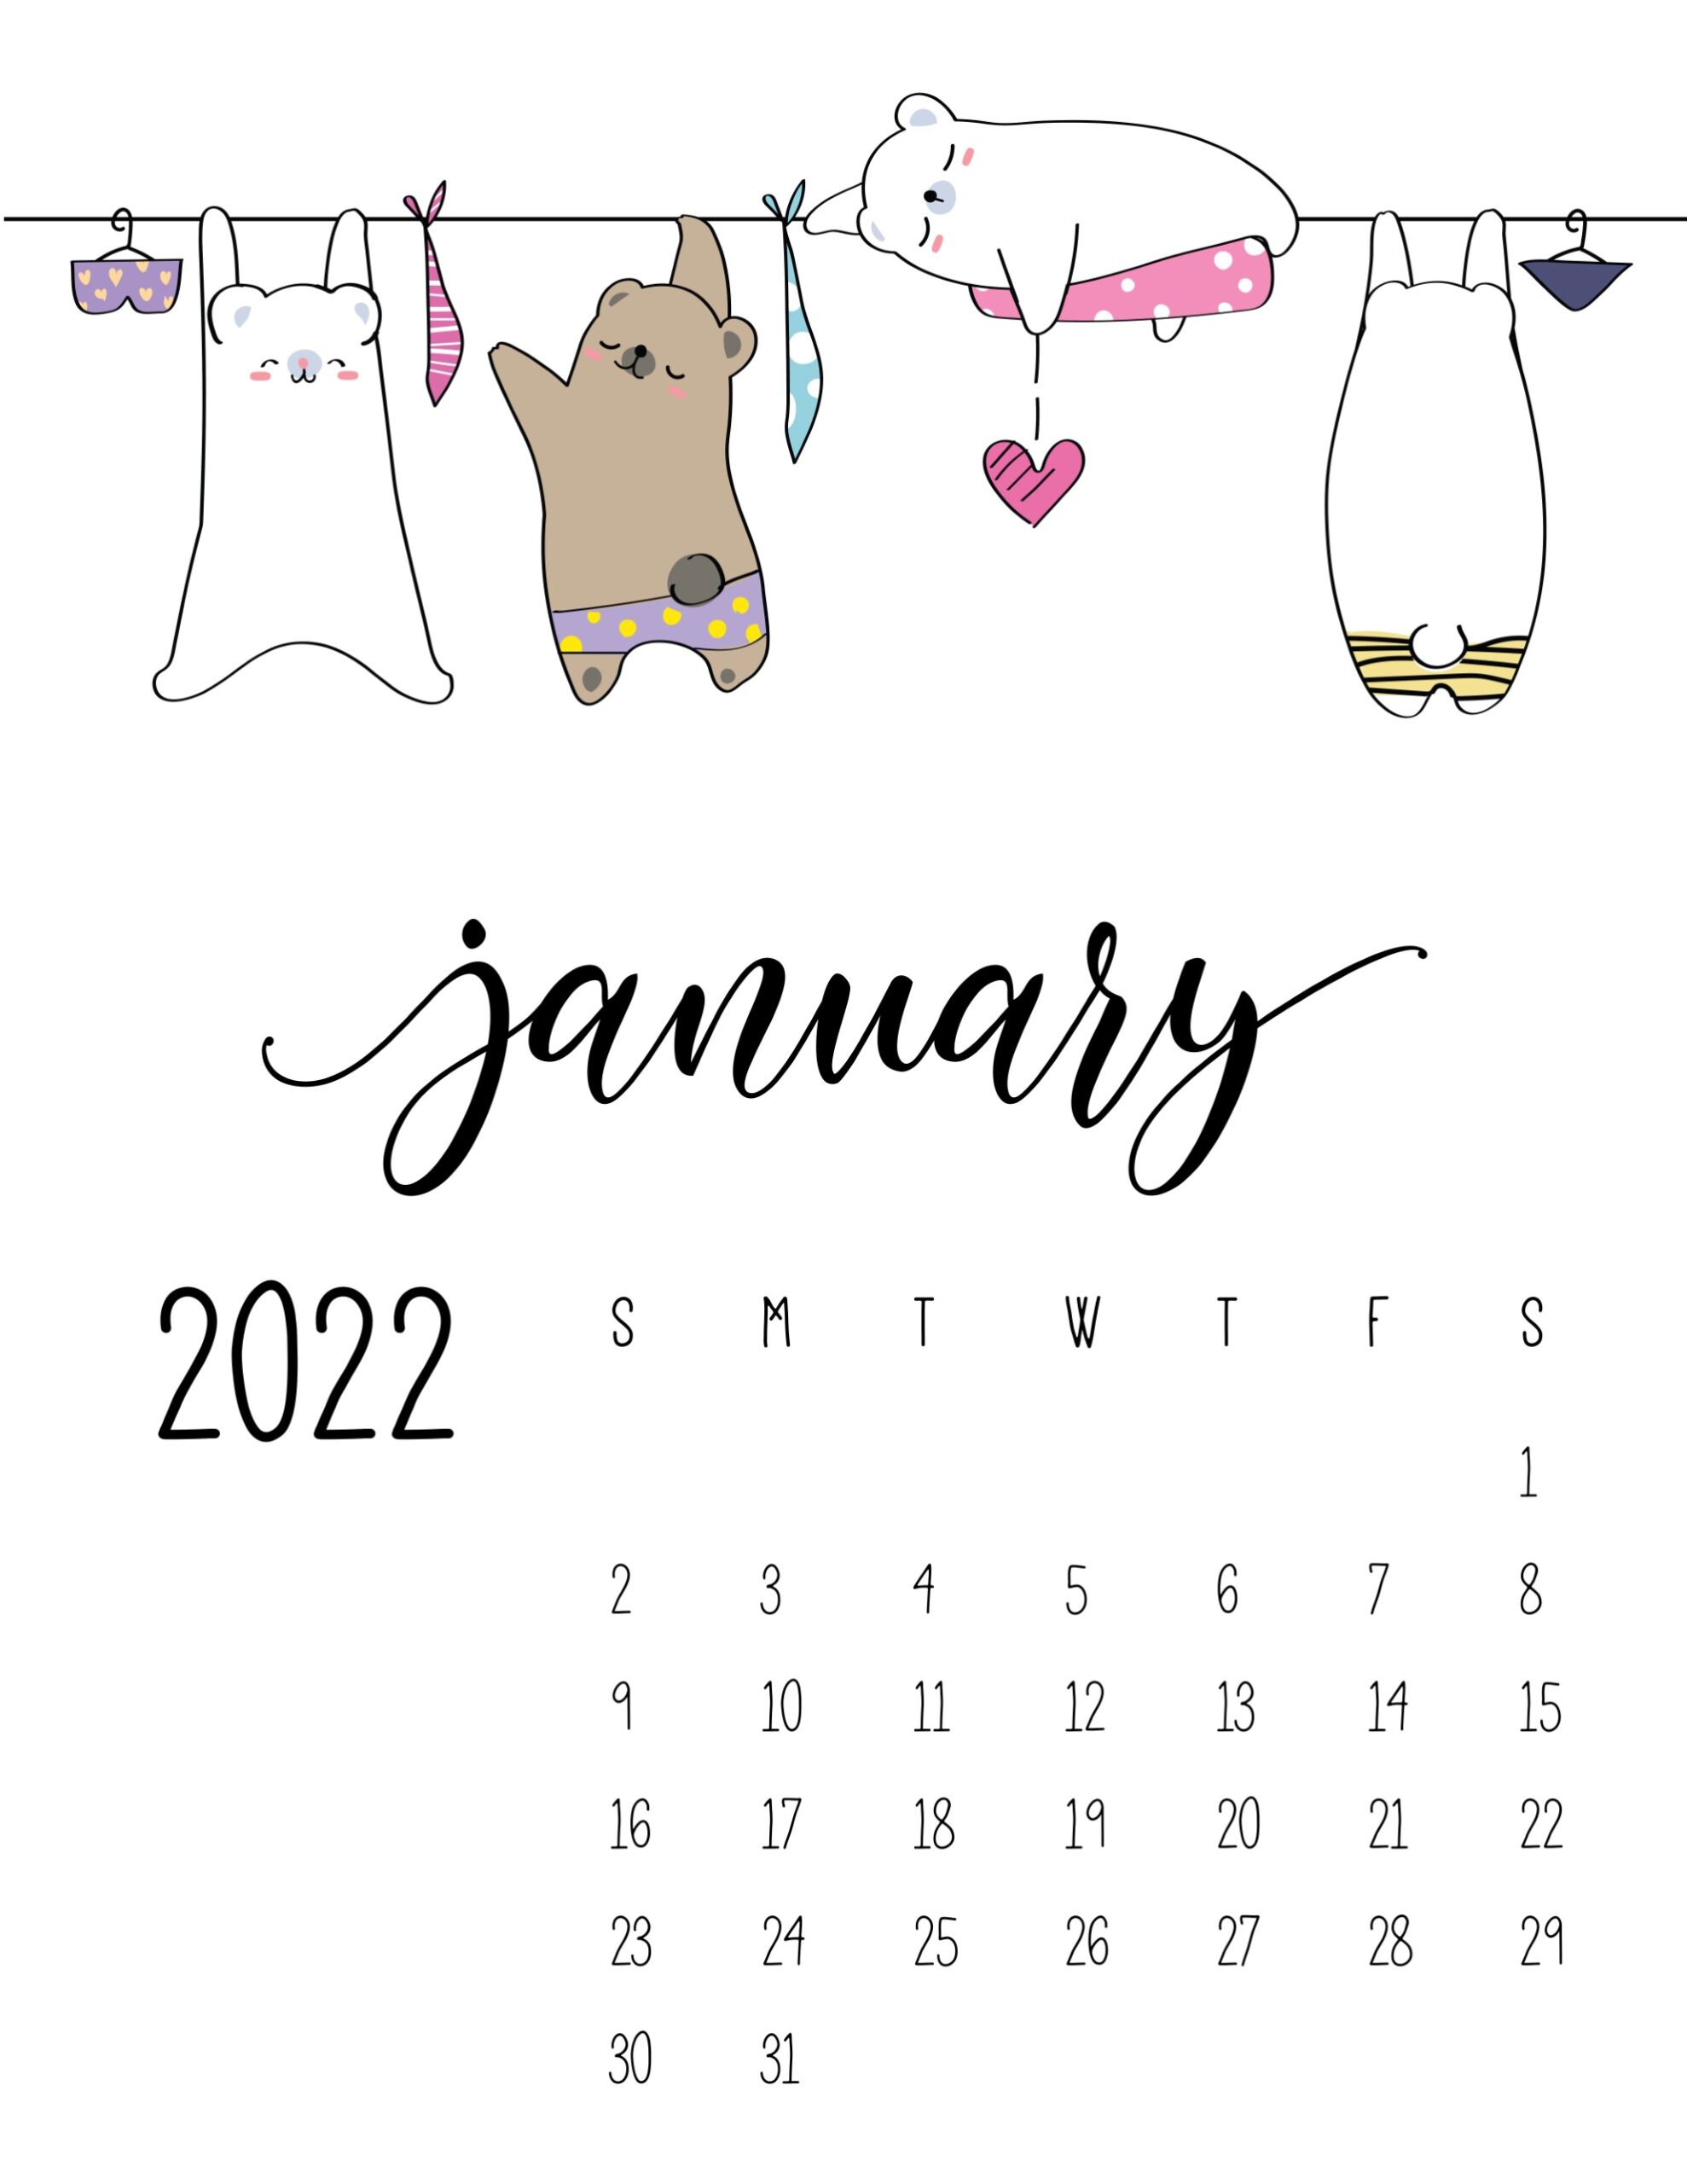 Calendario 2022 lavanderia janeiro